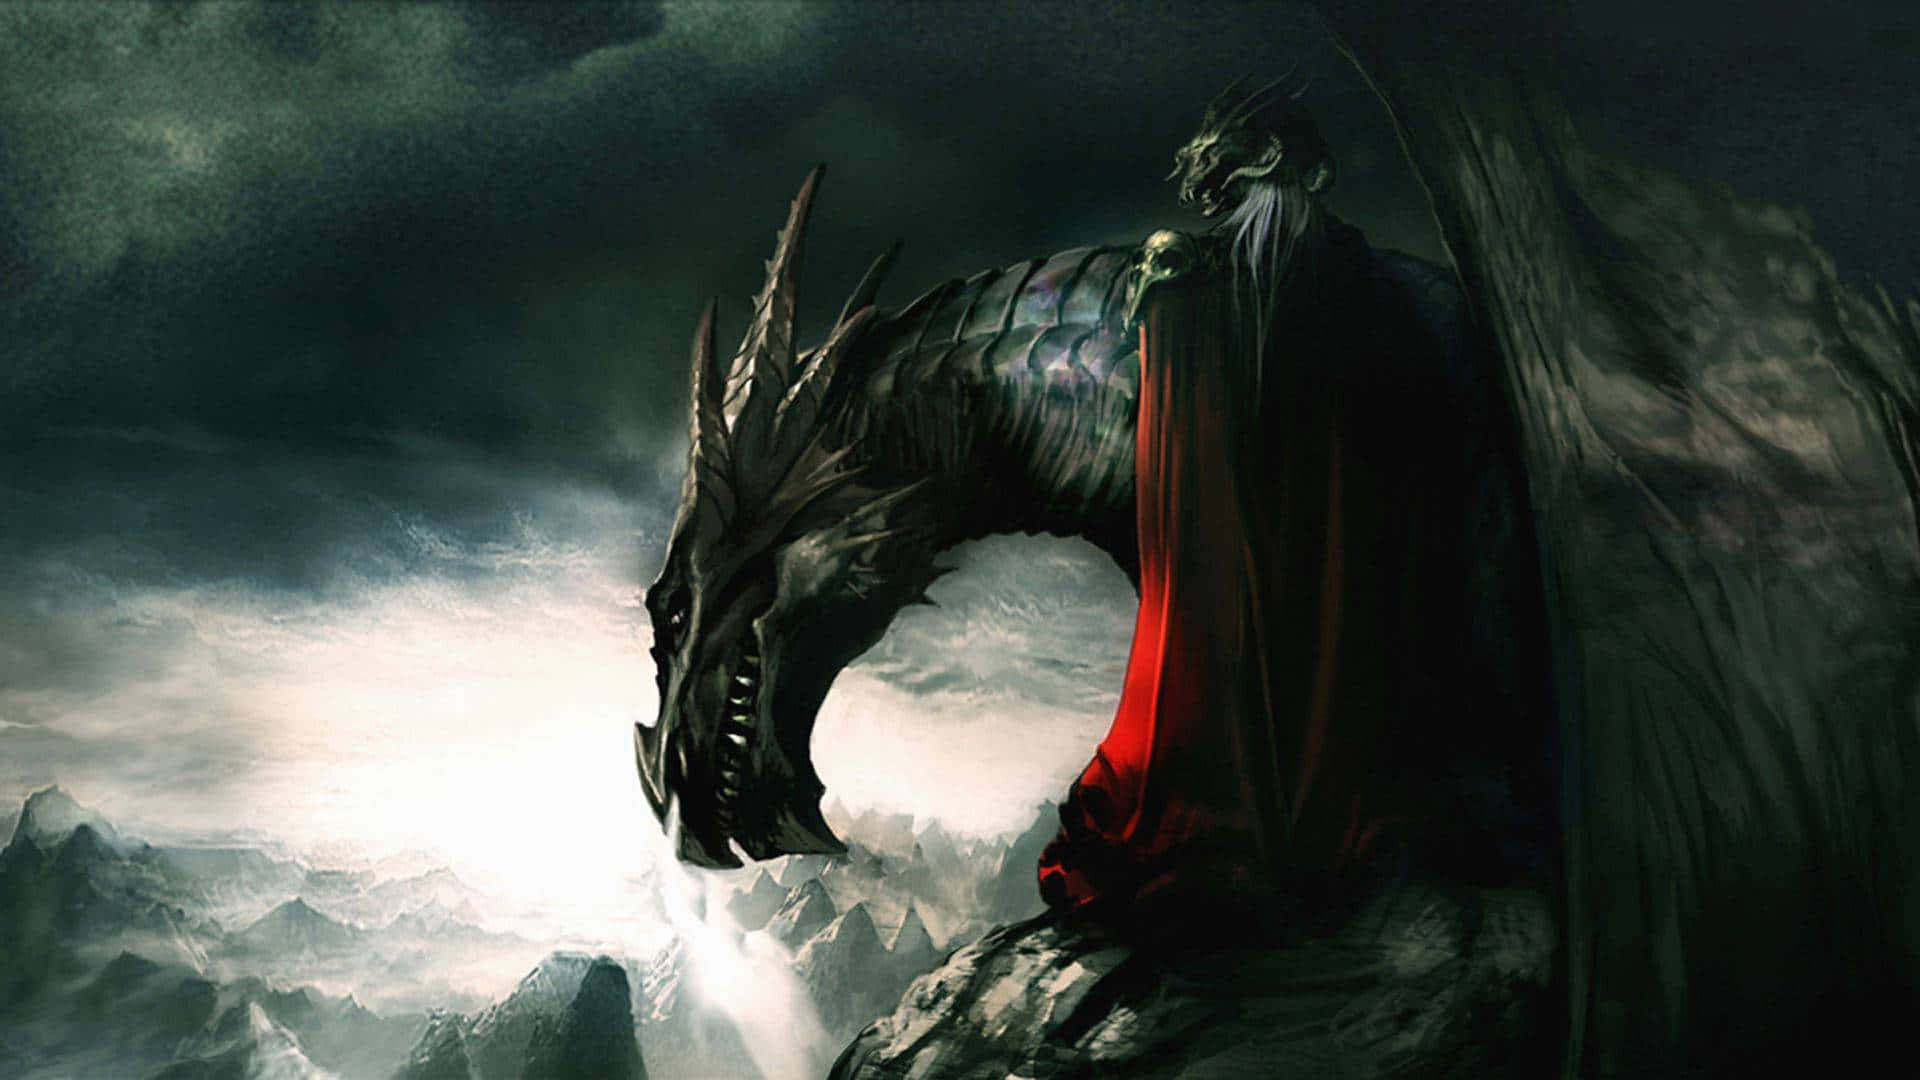 A Roaring, Powerful Dragon Wallpaper